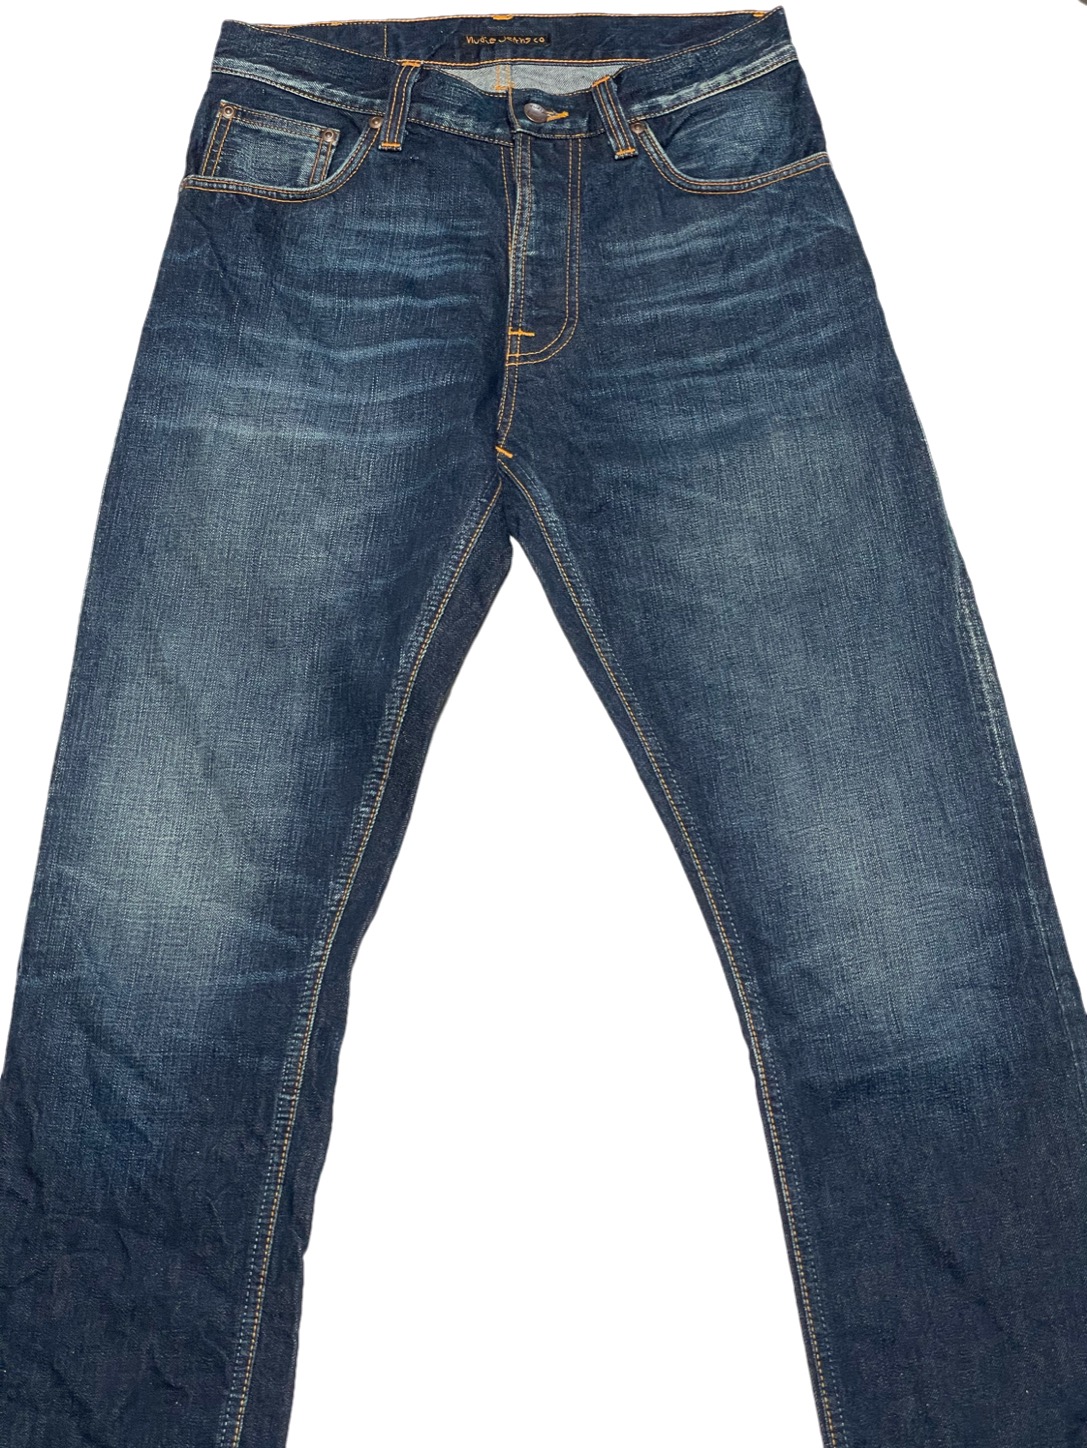 Nudie jeans ヌーディージーンズ/オーガニックコットン/デニムパンツ